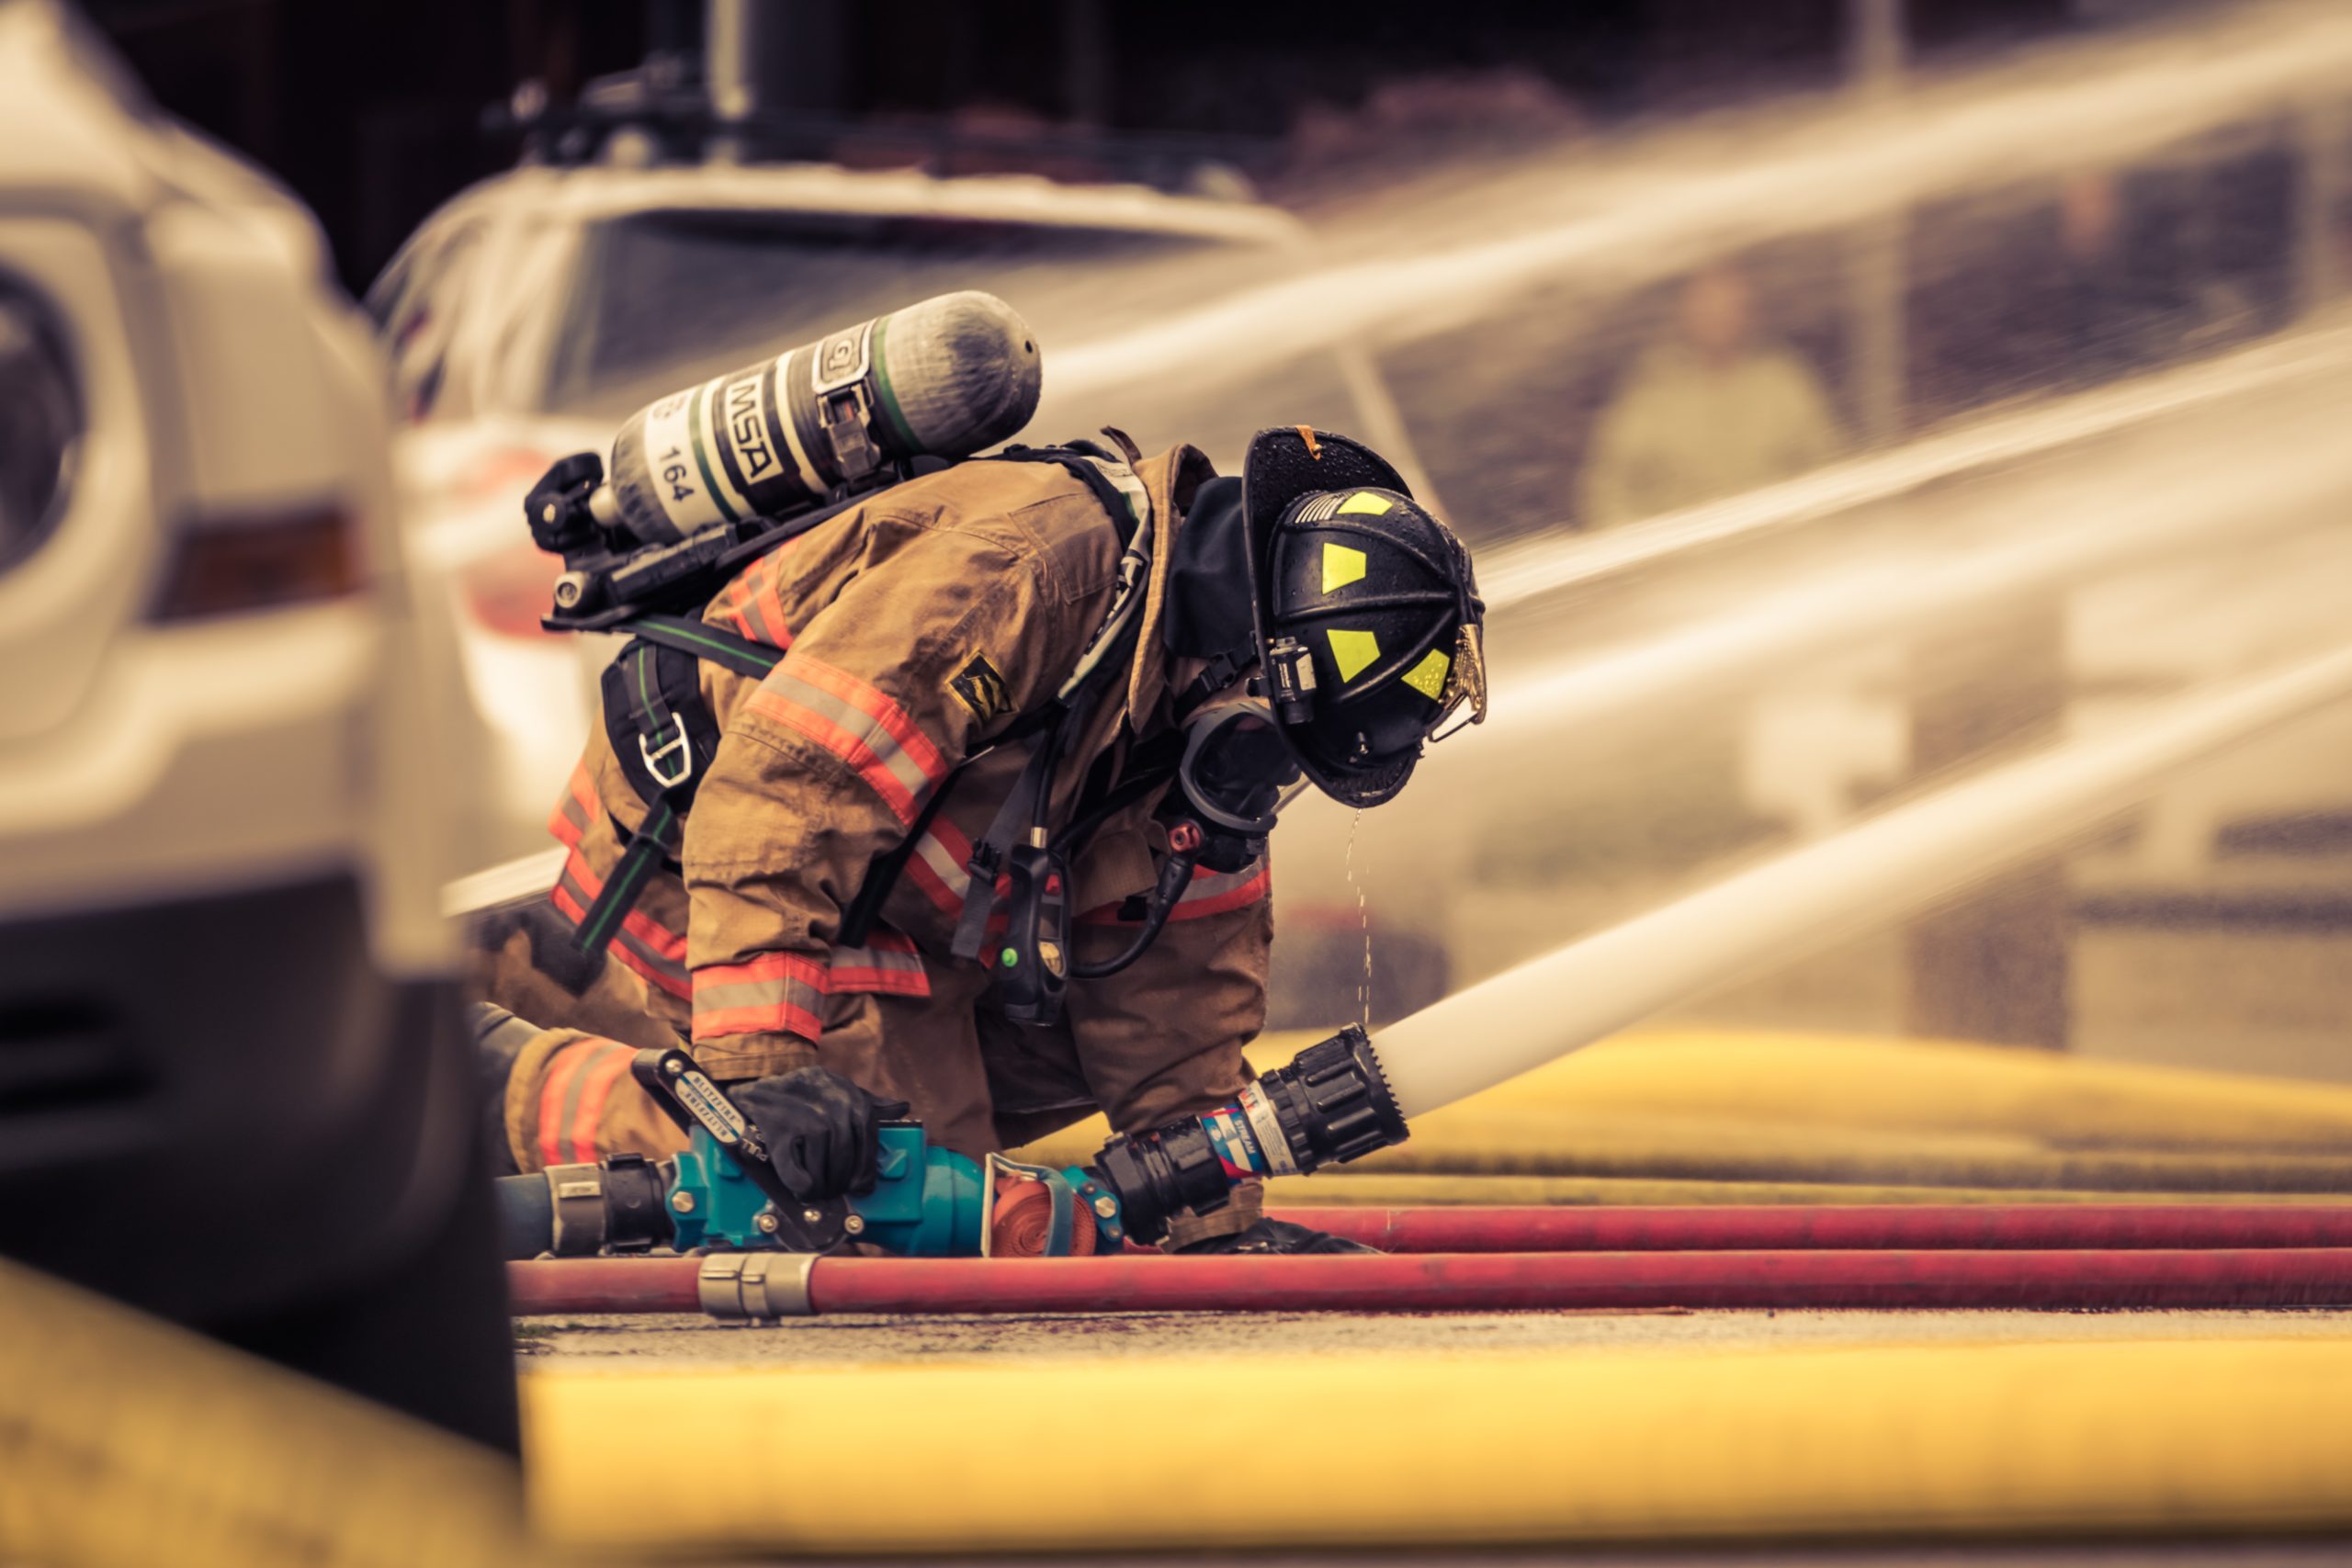 A firefighter spraying a hose